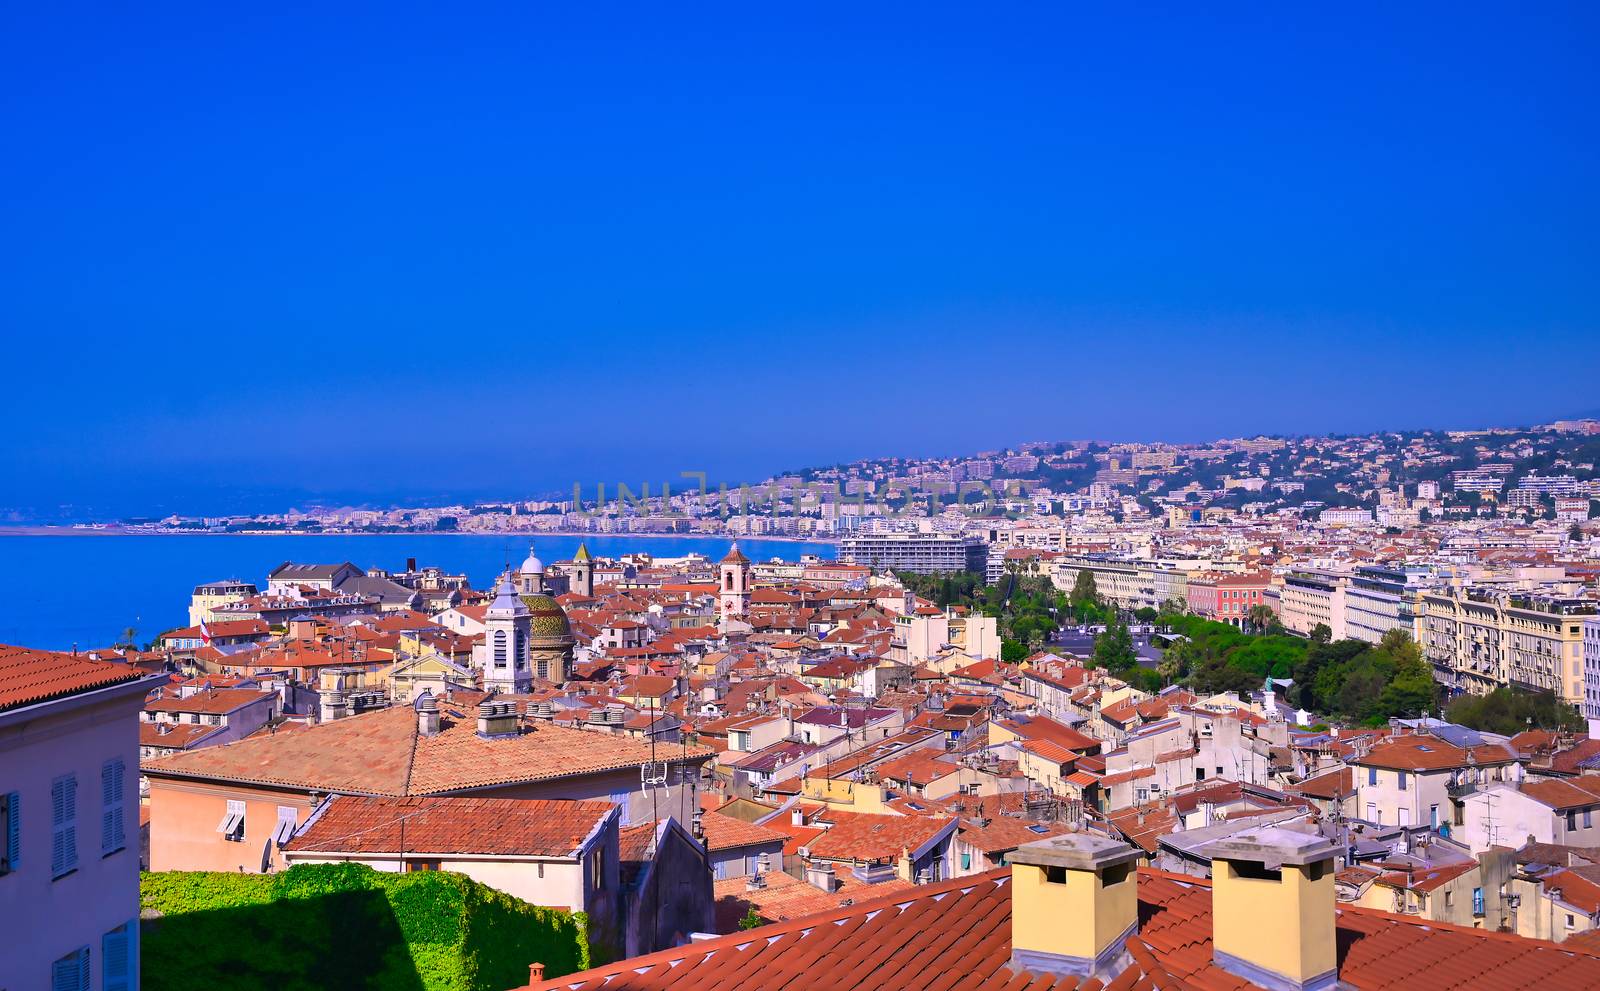 Aerial view of Nice, France by jbyard22